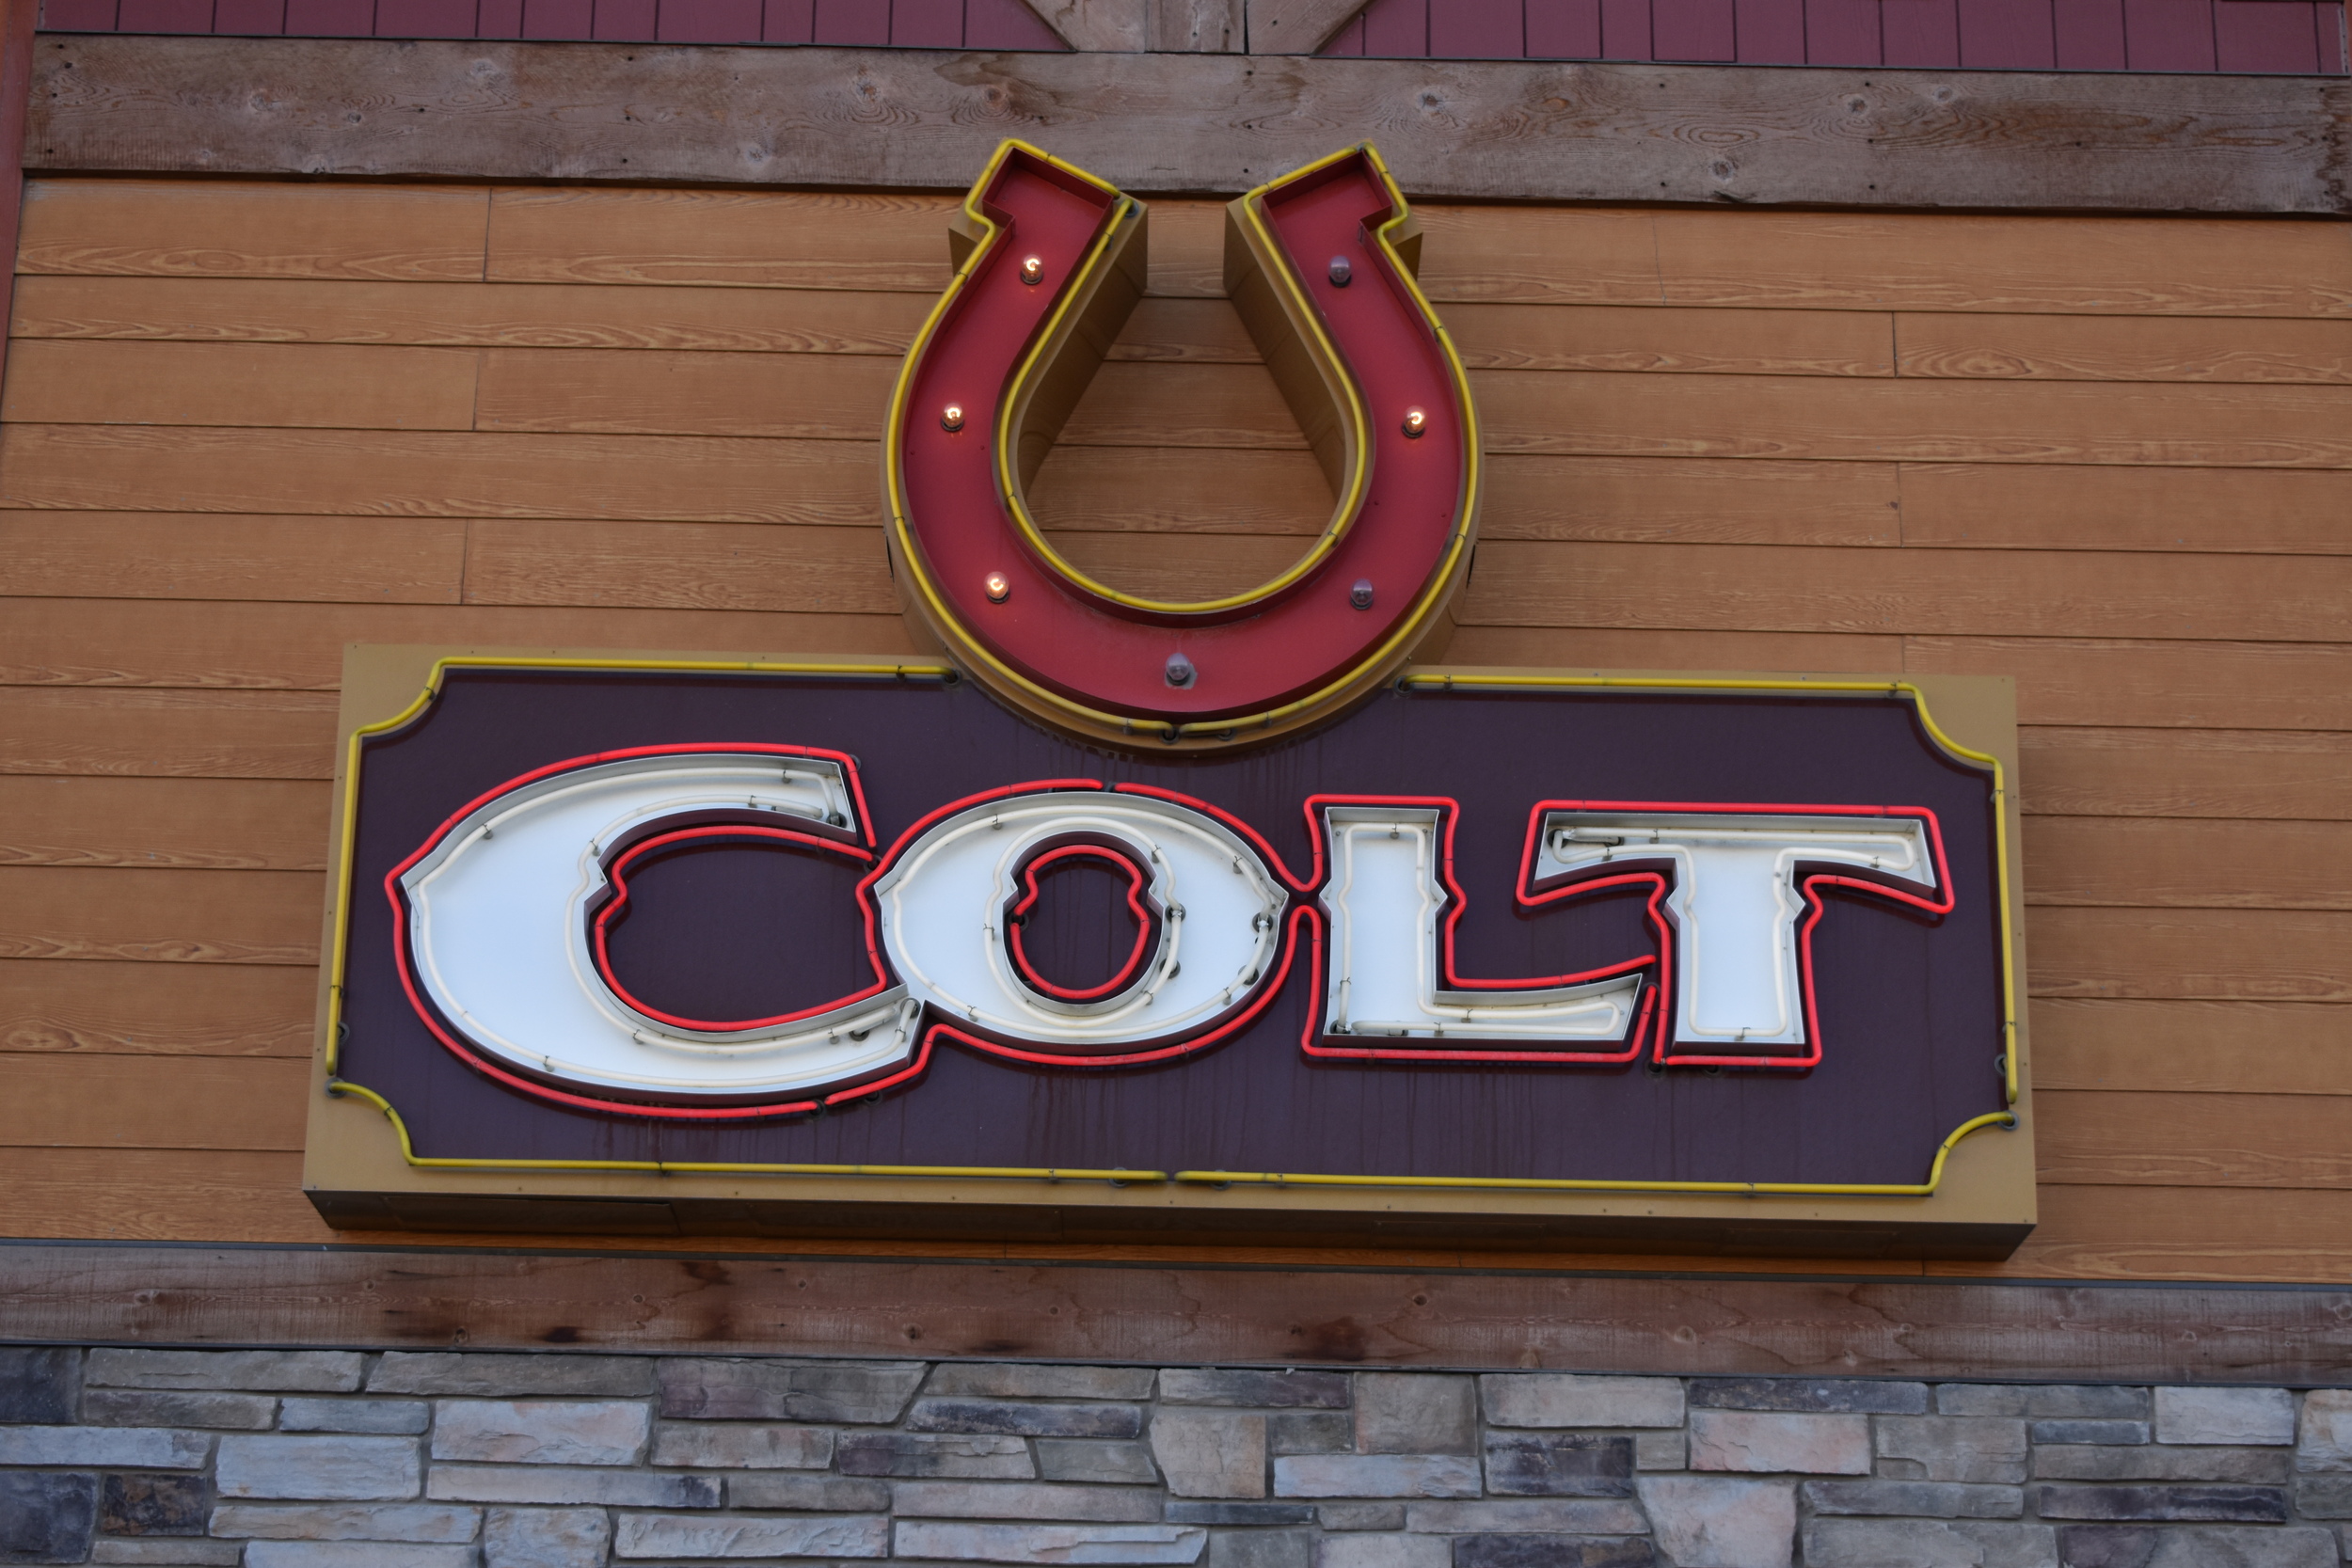 Colt Inn Casino wall mounted sign, Battle Mountain, Nevada